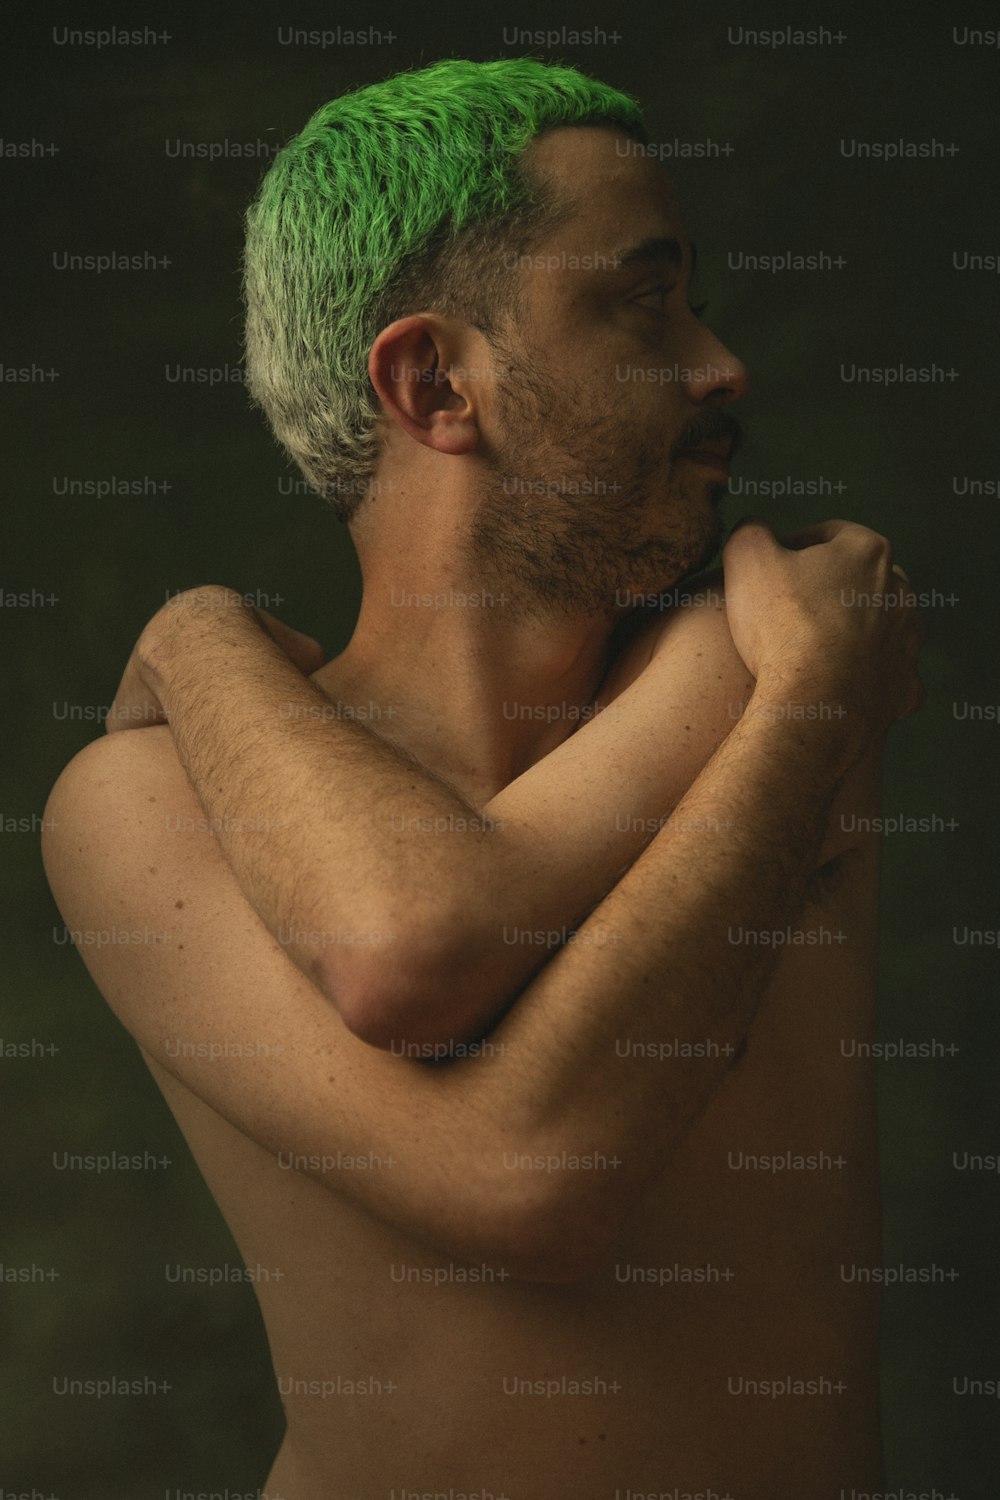 a shirtless man with green hair and no shirt